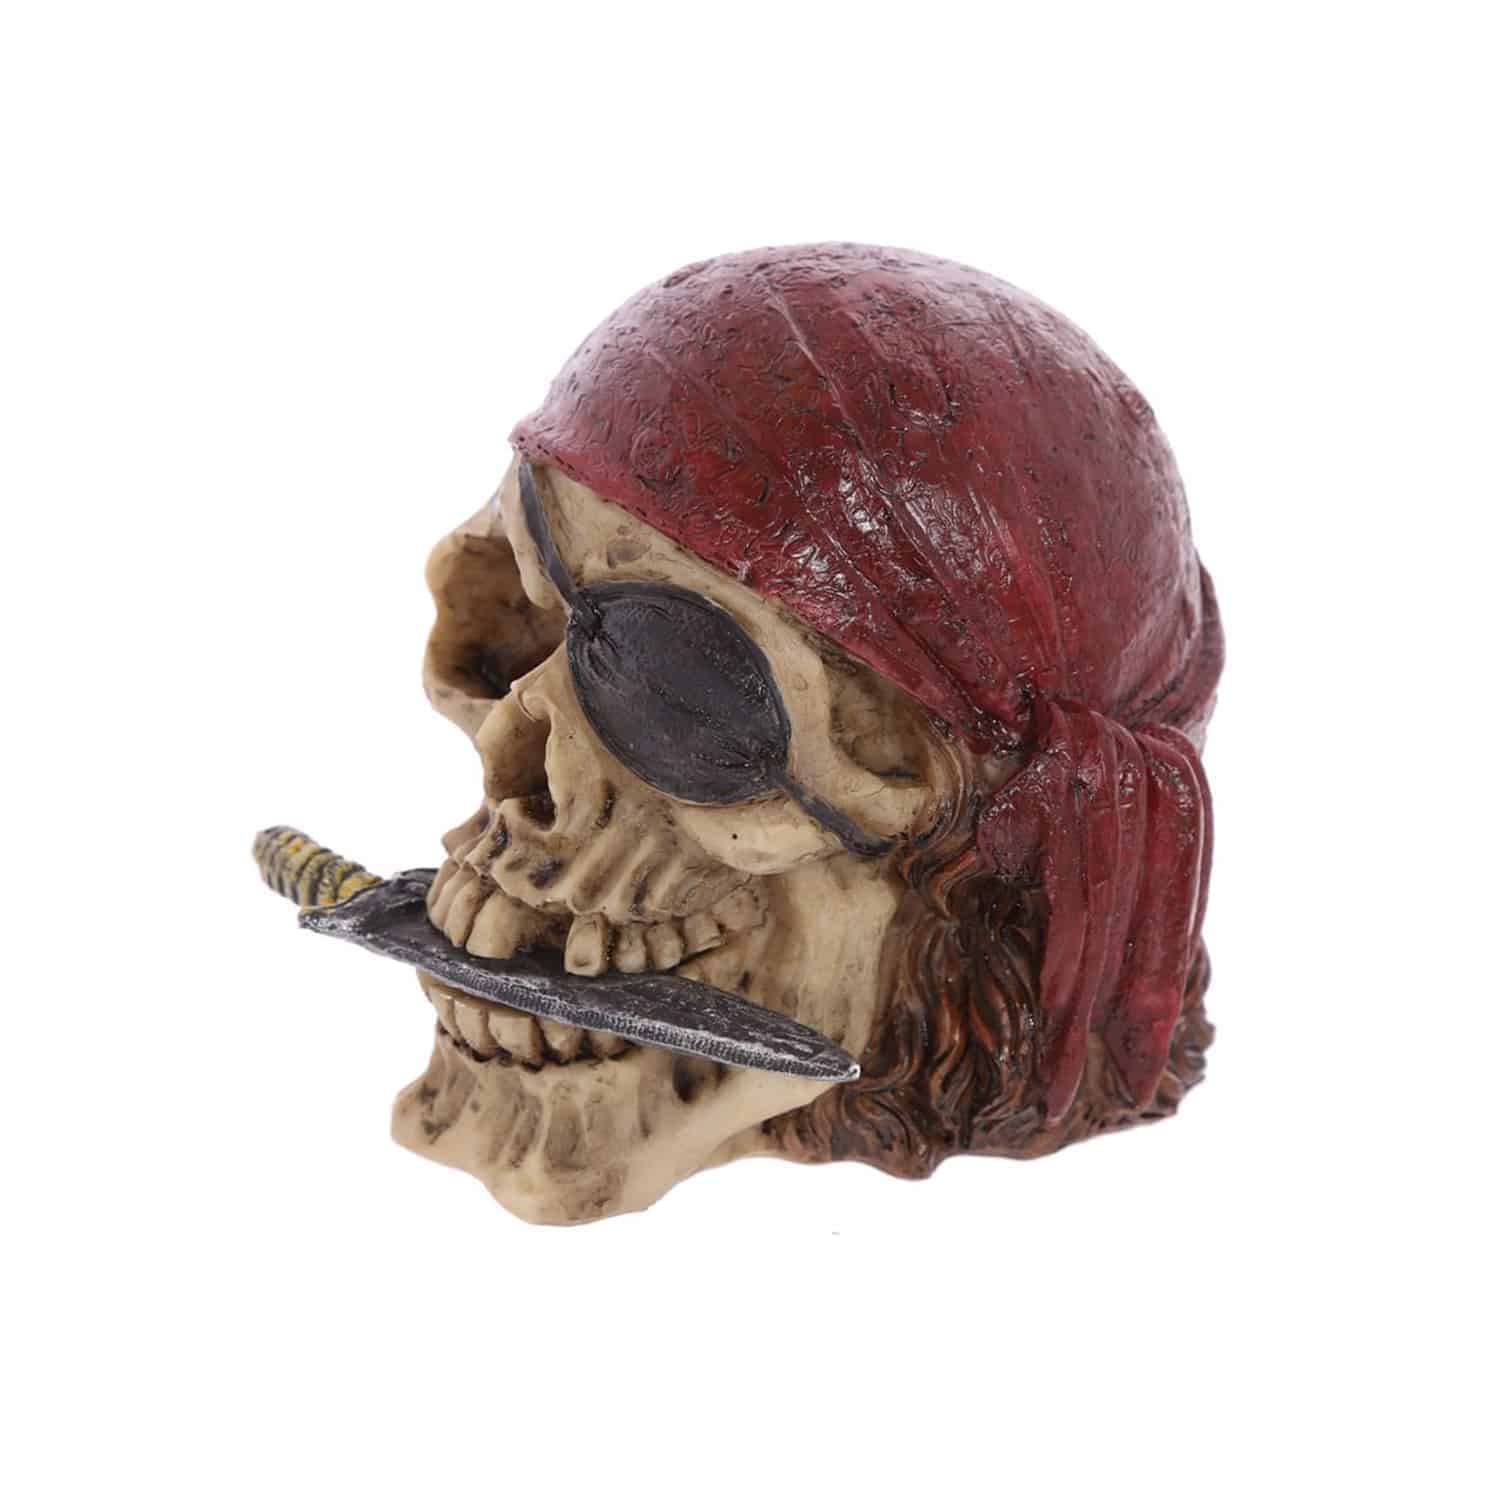 Pirate Skulls